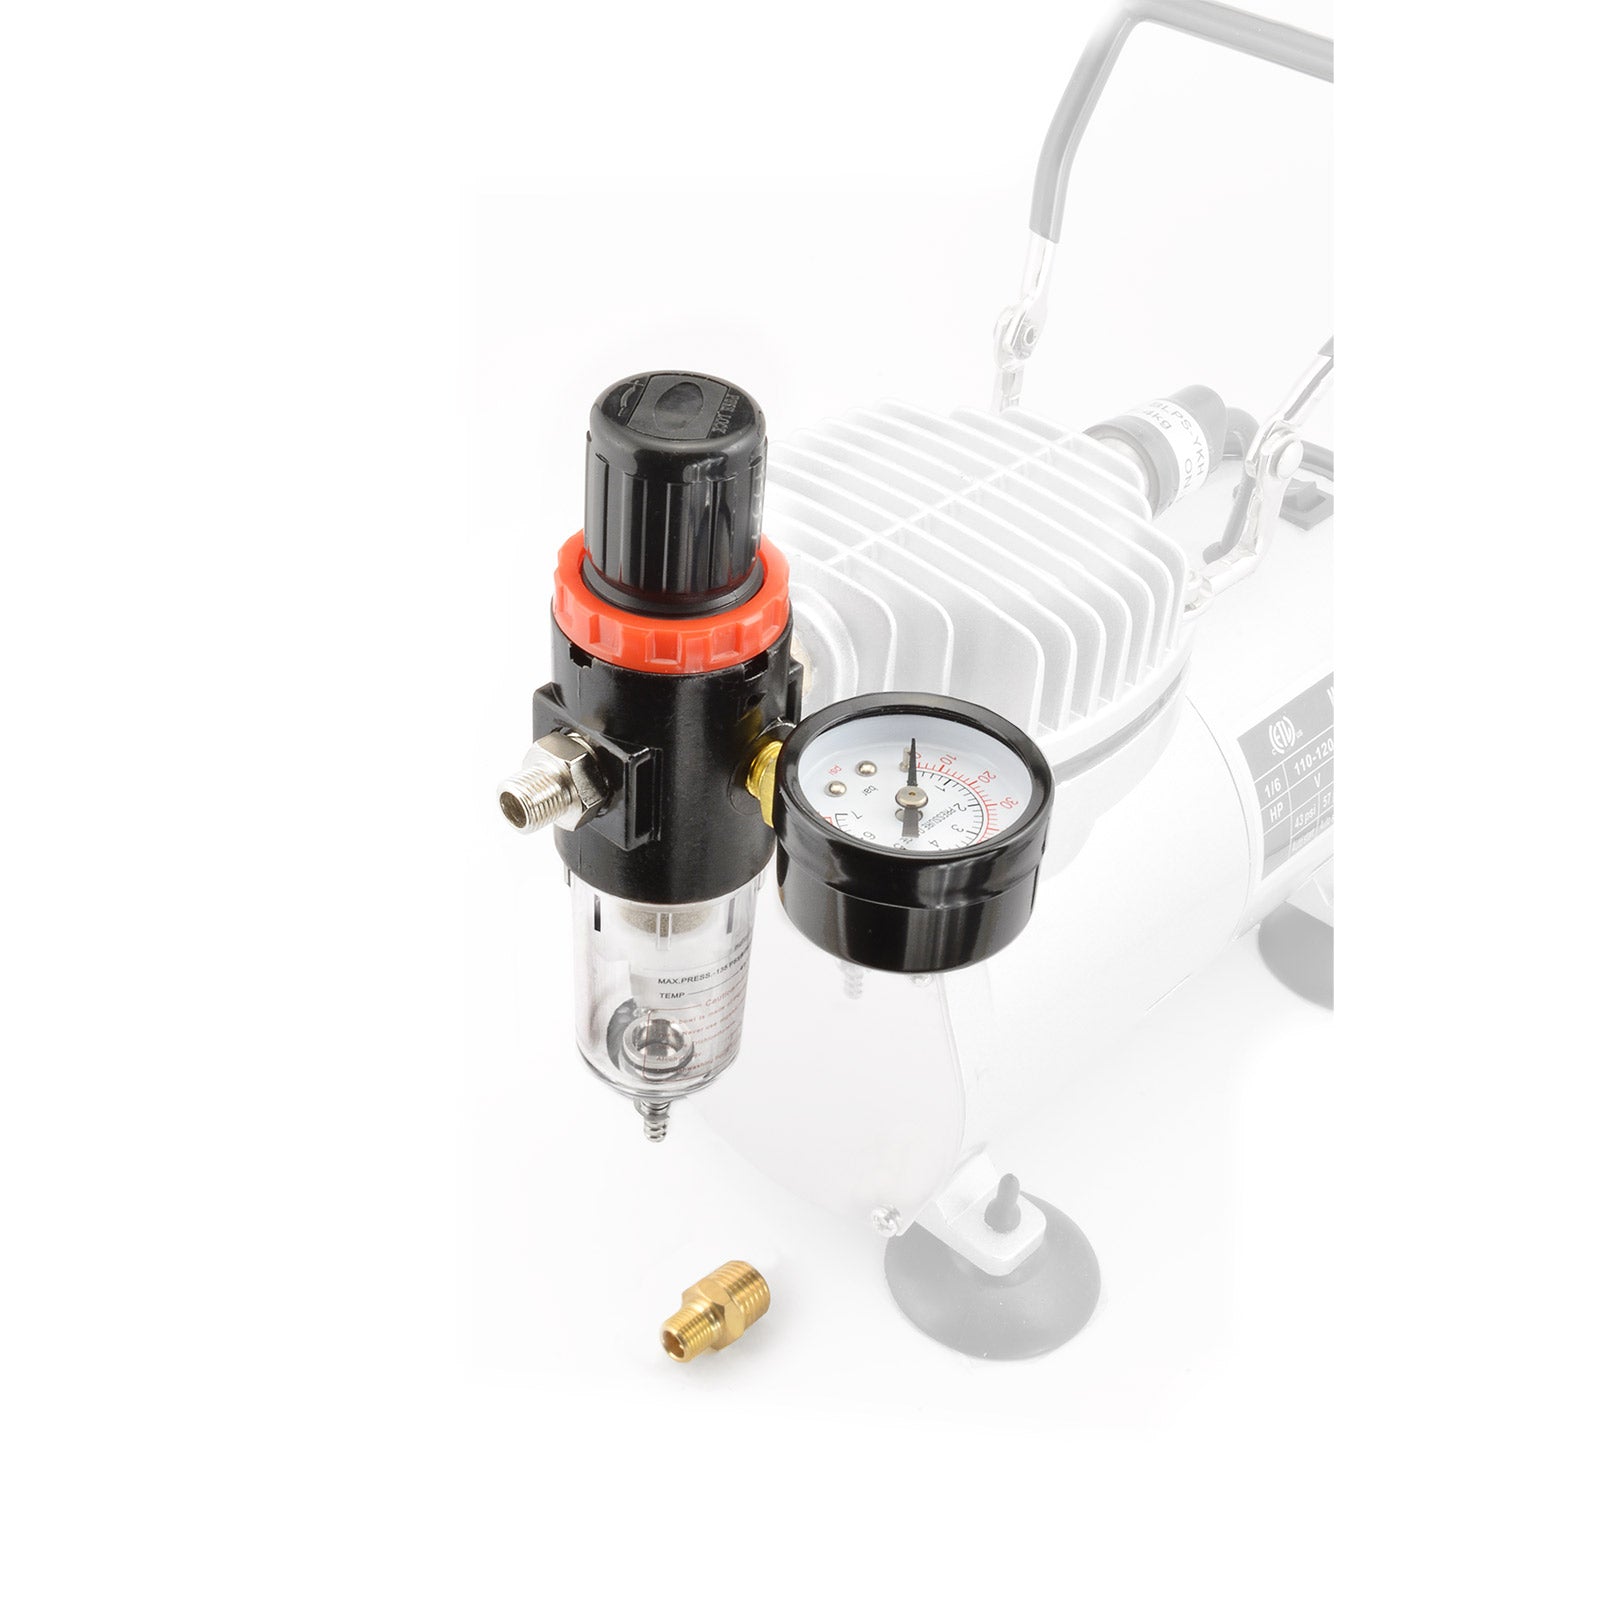 Pressure Regulator / Gauge / Moisture Trap - Micro - Mark Airbrush Accessories